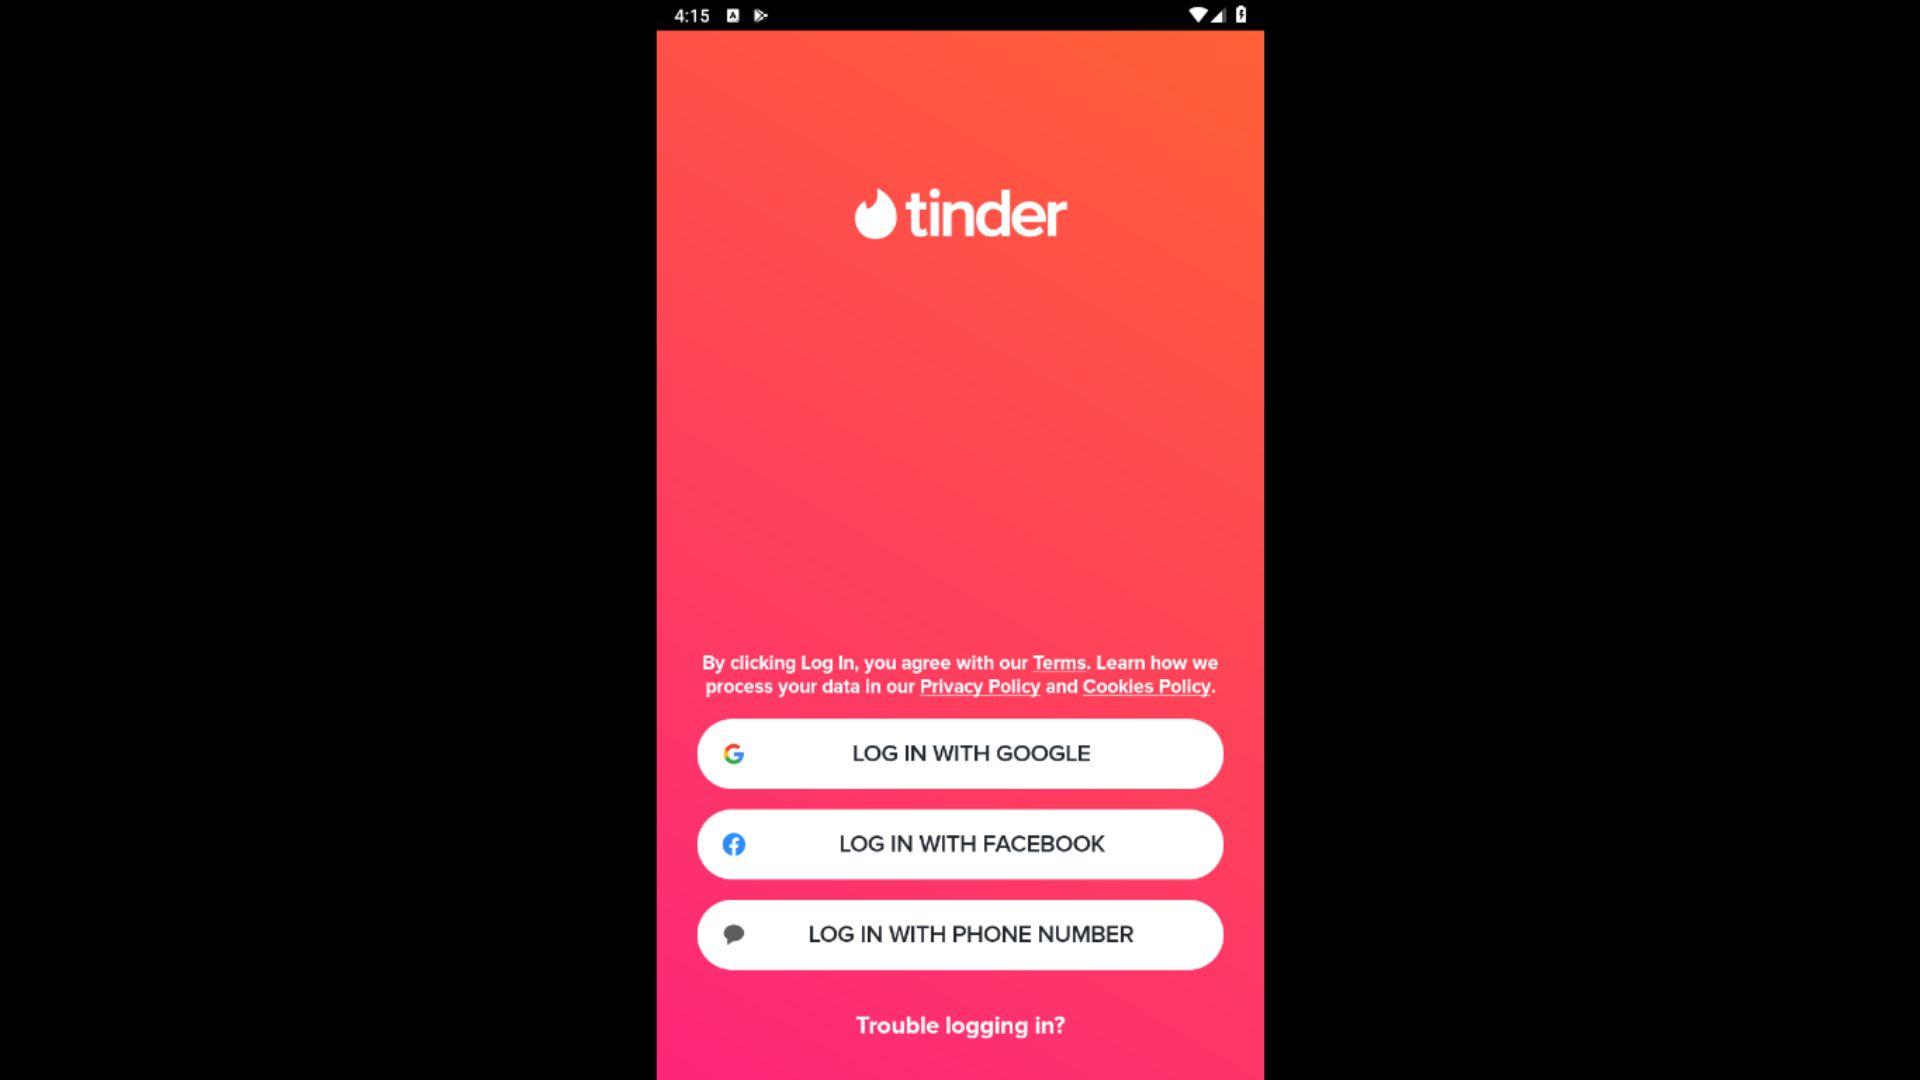 Tinder Dating app. Meet People